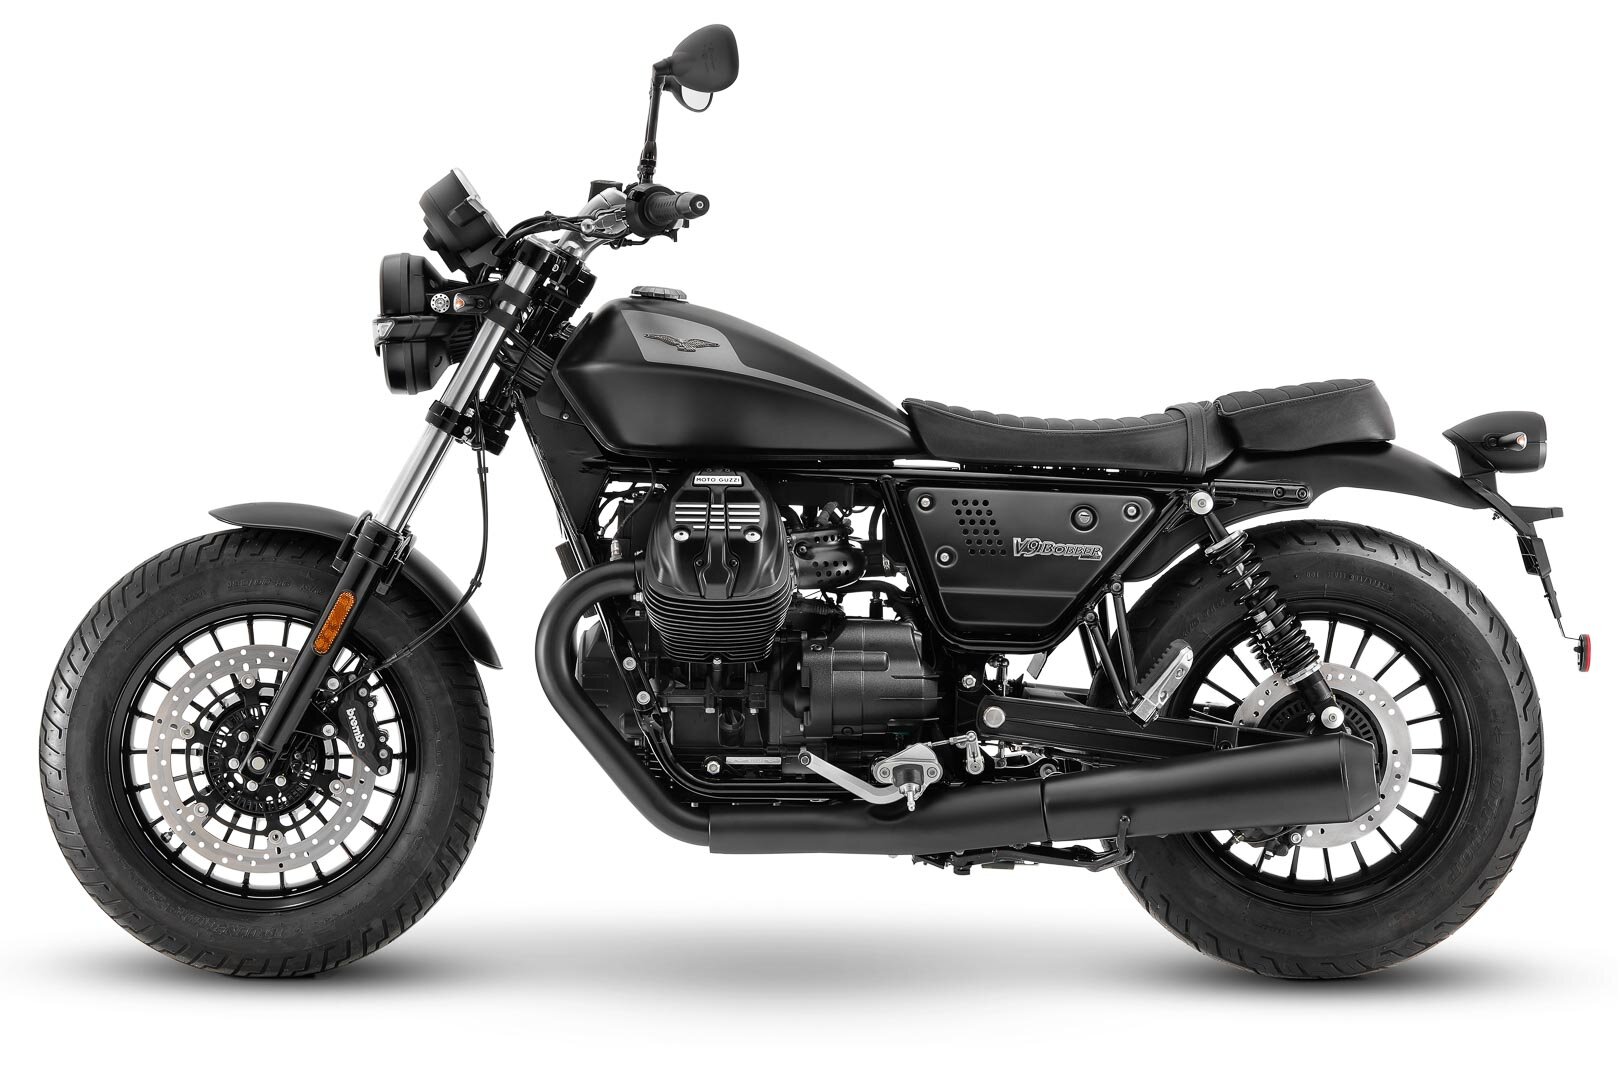 2021-Moto-Guzzi-V9-Bobber-First-Look-retro-cruiser-motorcycle-3.jpg